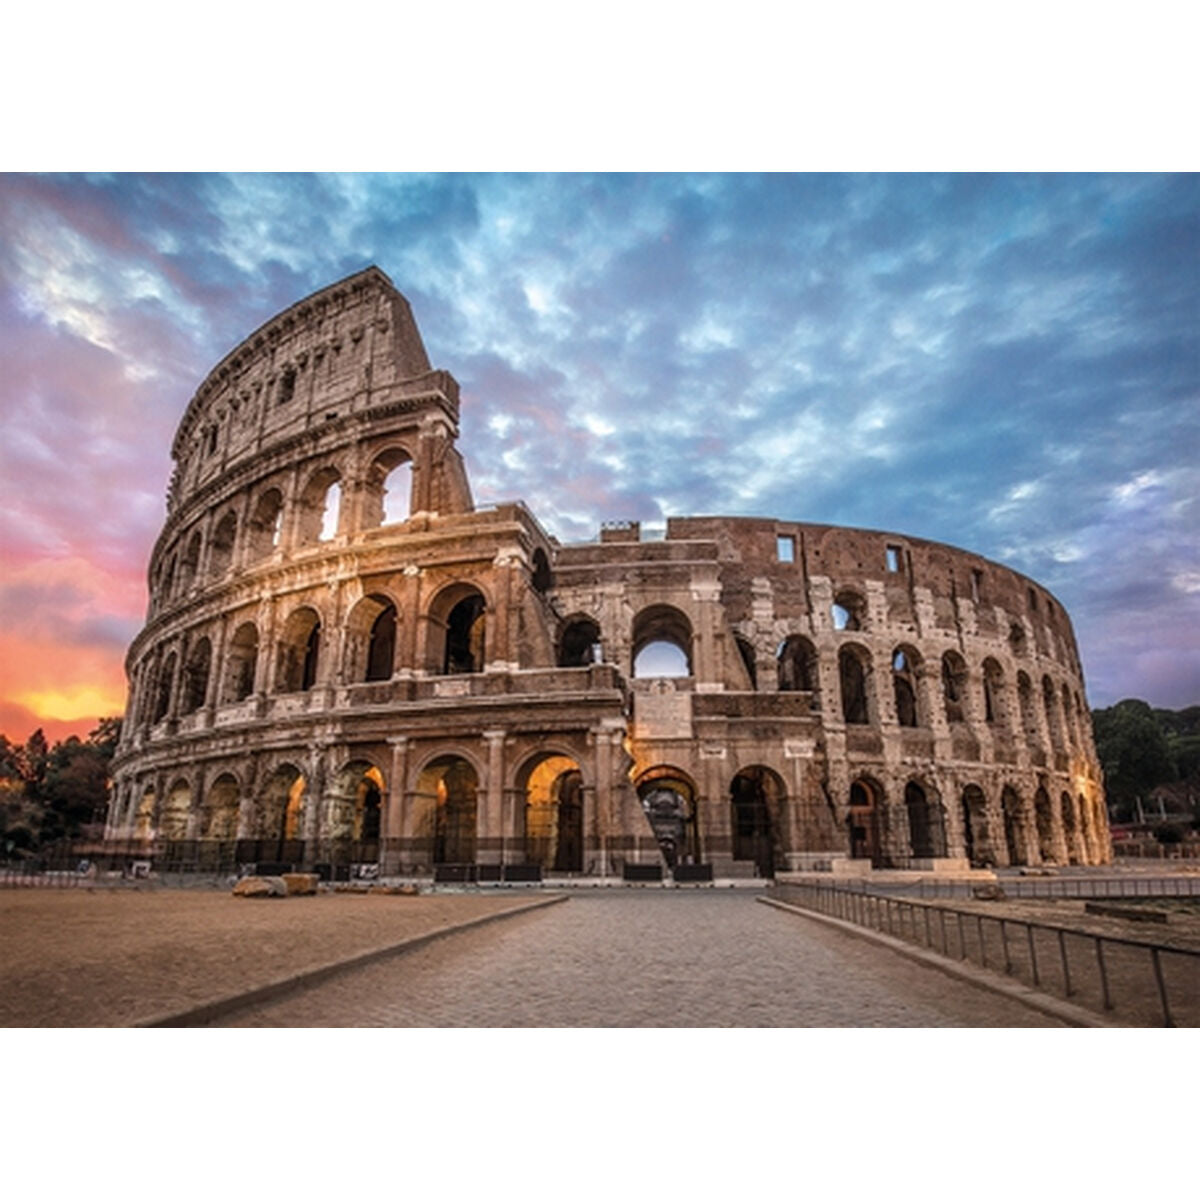 Puzzel Clementoni 33548 Colosseum Sunrise - Rome 3000 Onderdelen